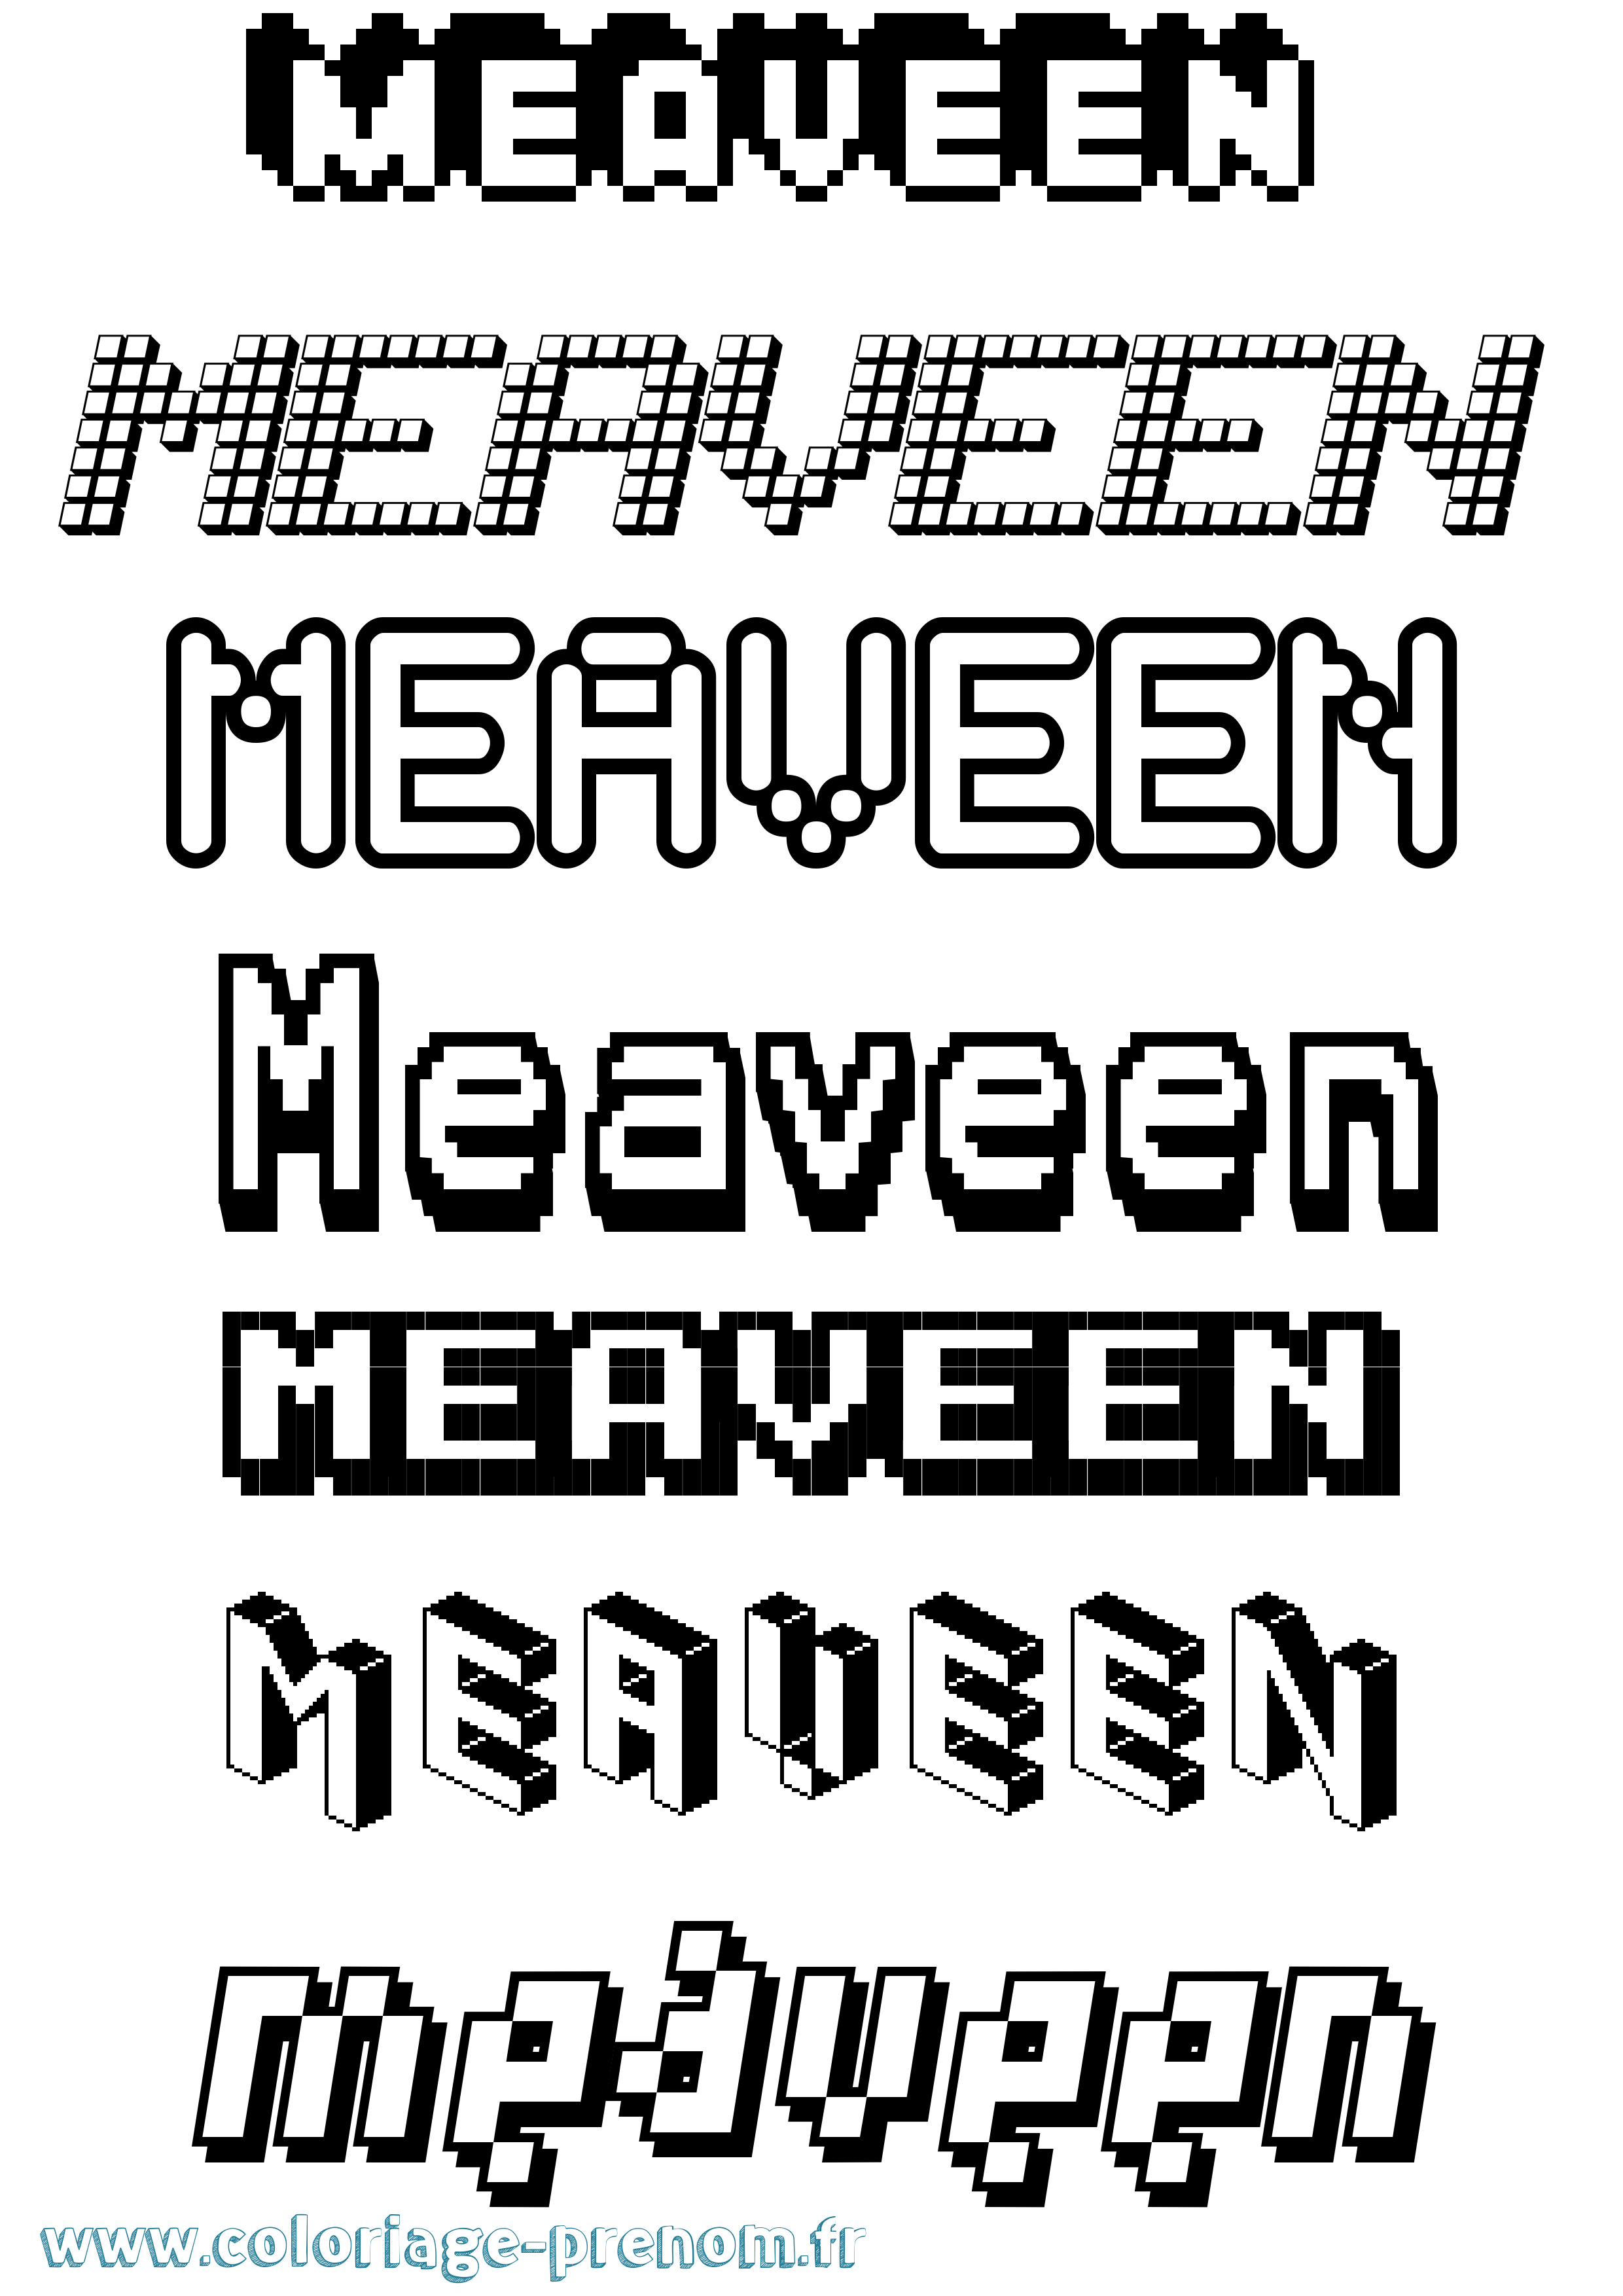 Coloriage prénom Meaveen Pixel